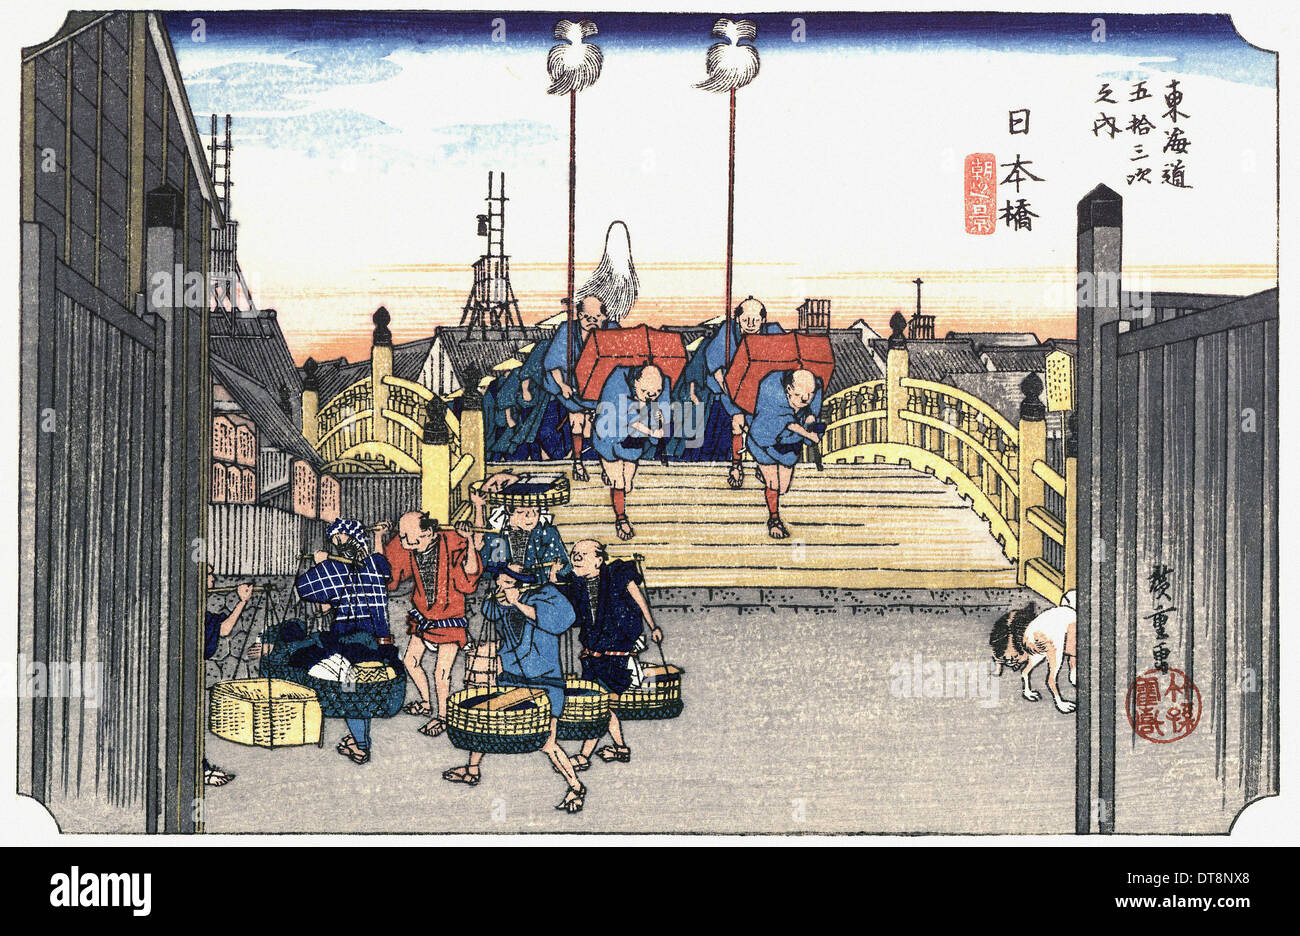 Utagawa Hiroshige - 歌川 広重 - The 53 Stations of the Tokaido - Nihonbashi Stock Photo